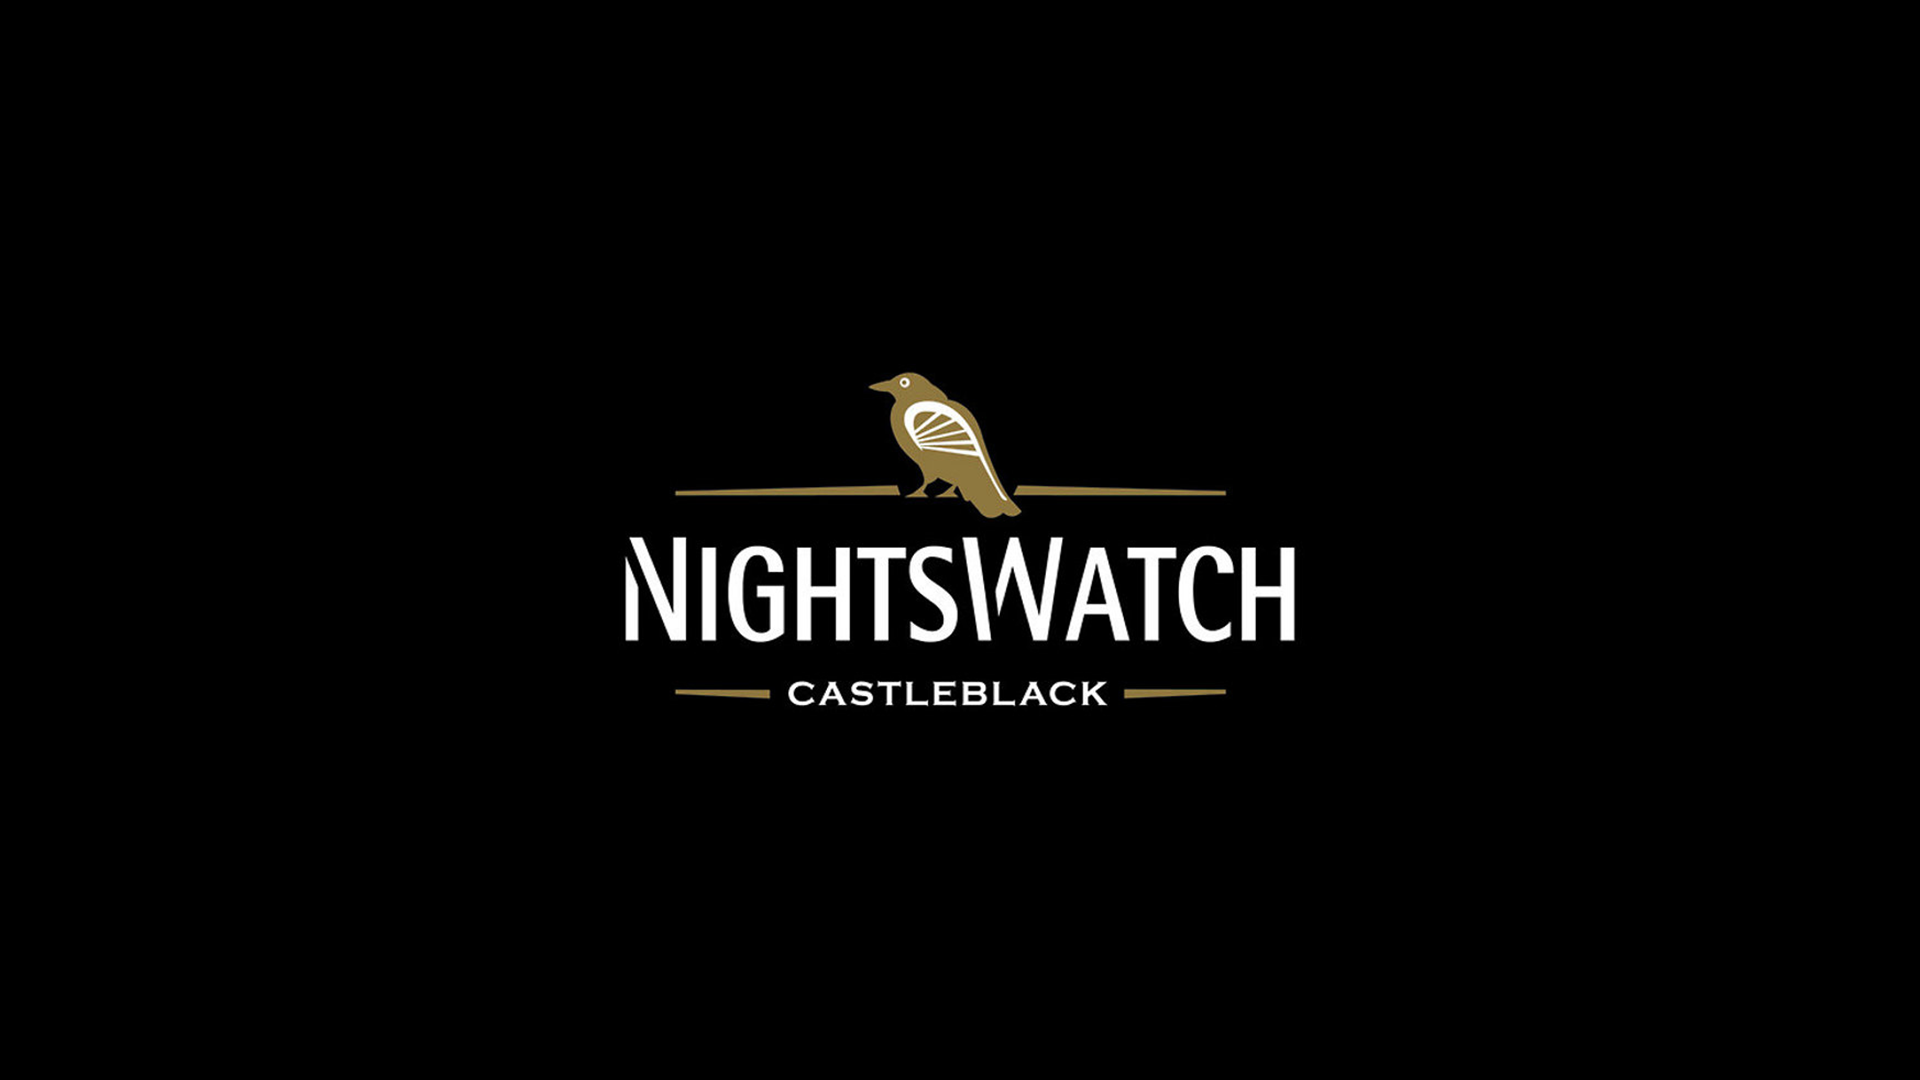 Nights Watch - Castleblack Wallpaper